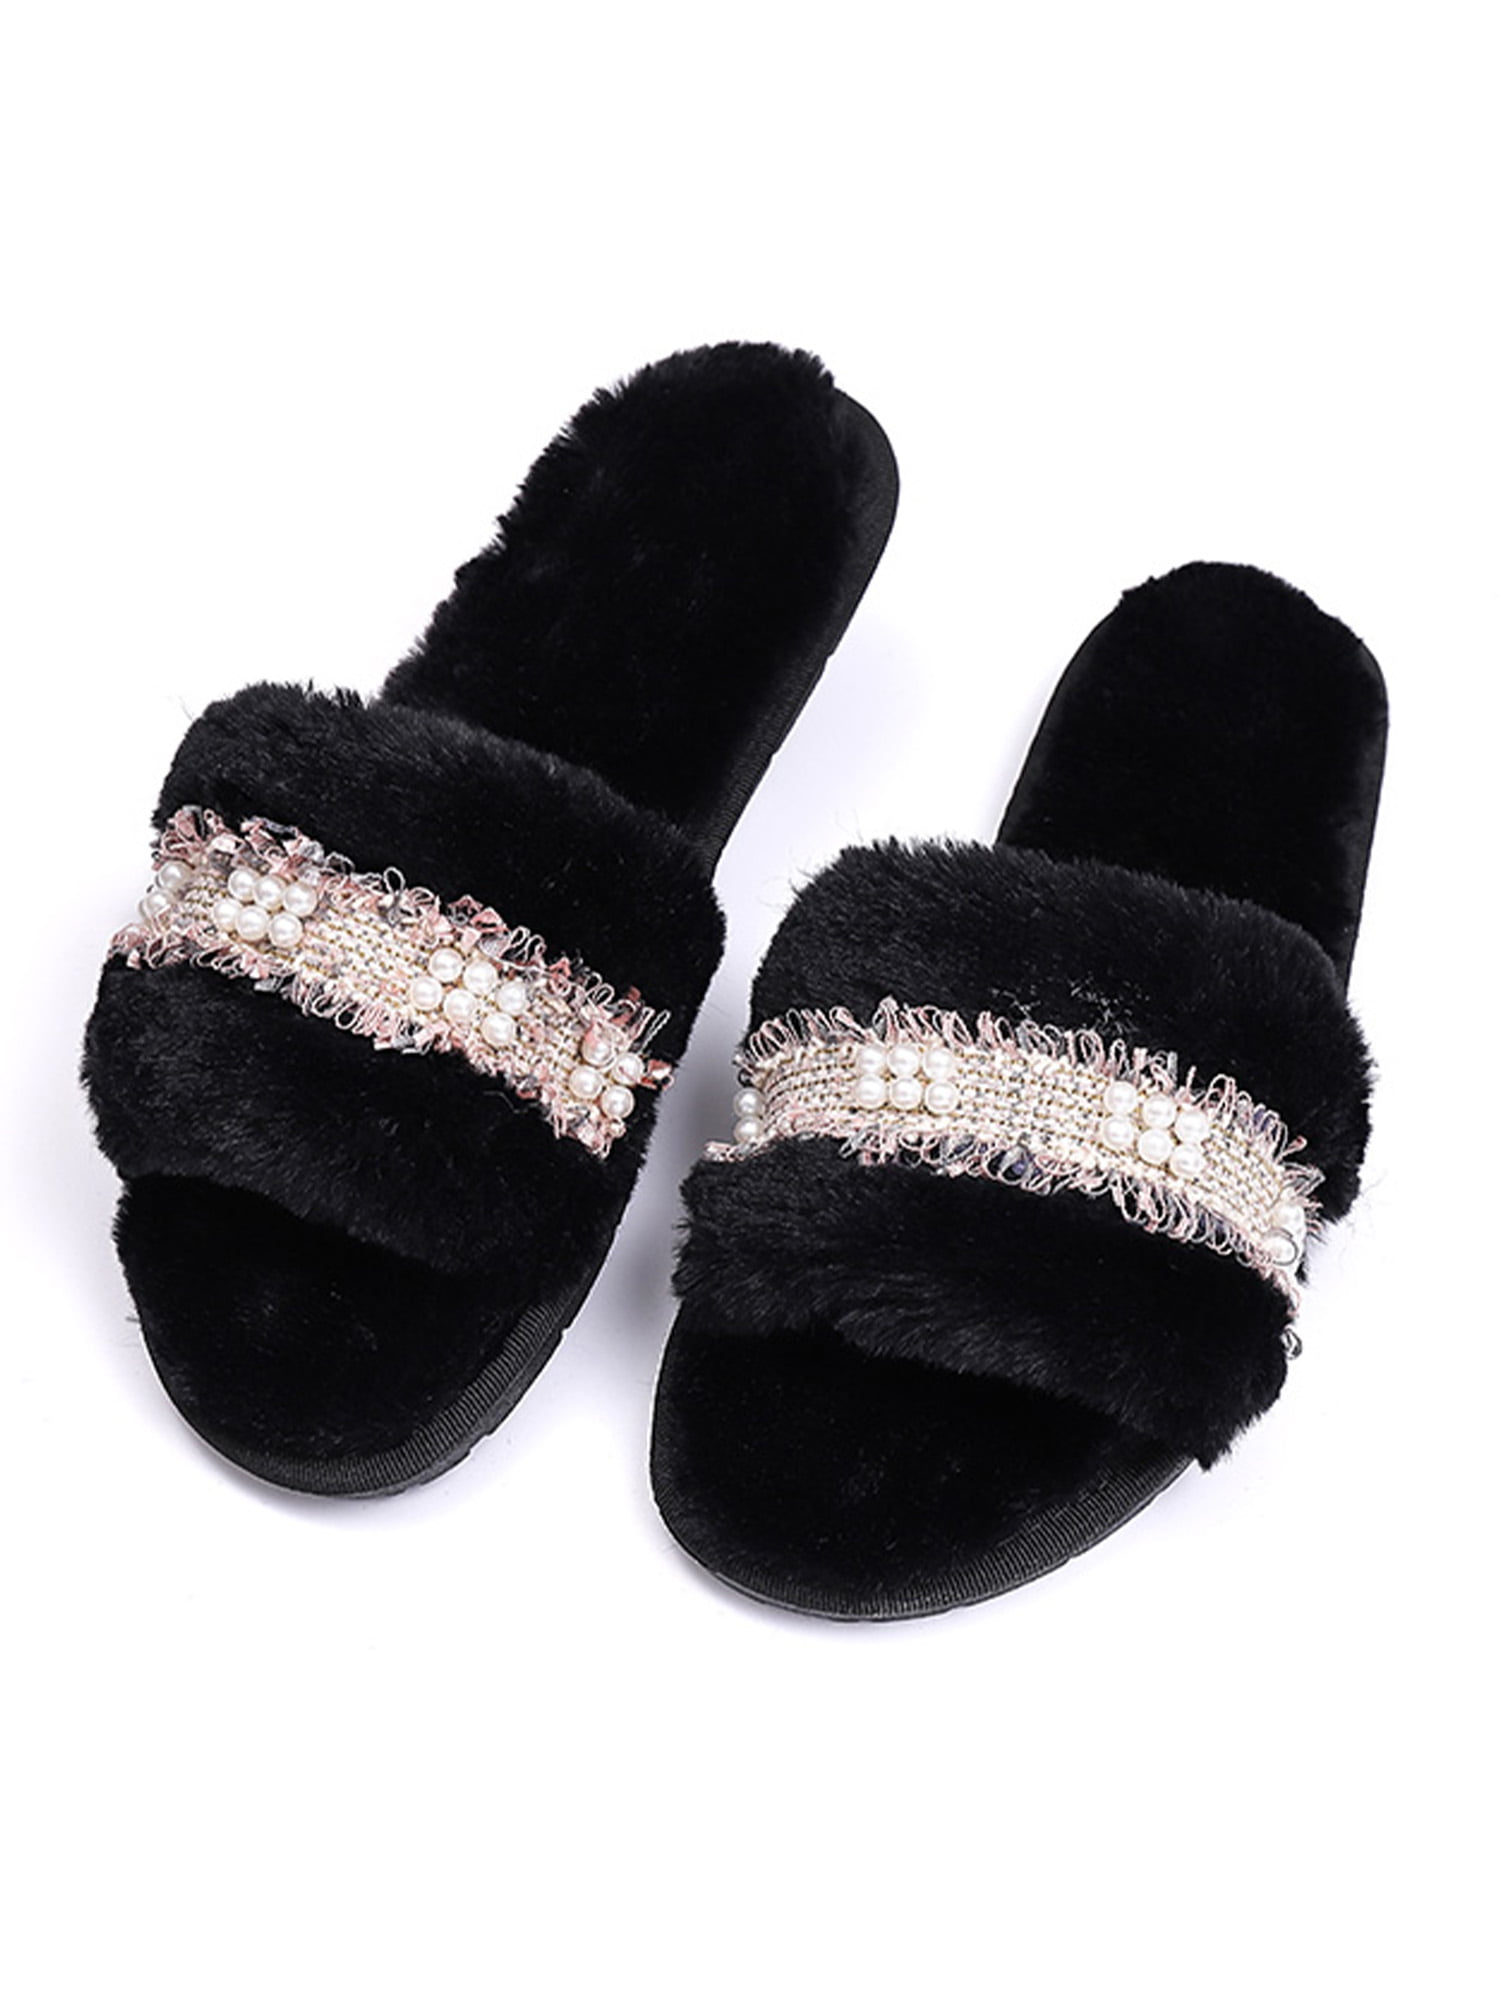 Fluffy Fur Sliders Slippers Slip On Flat Sandals Mules Shoes Womens UK3.5-9Size 